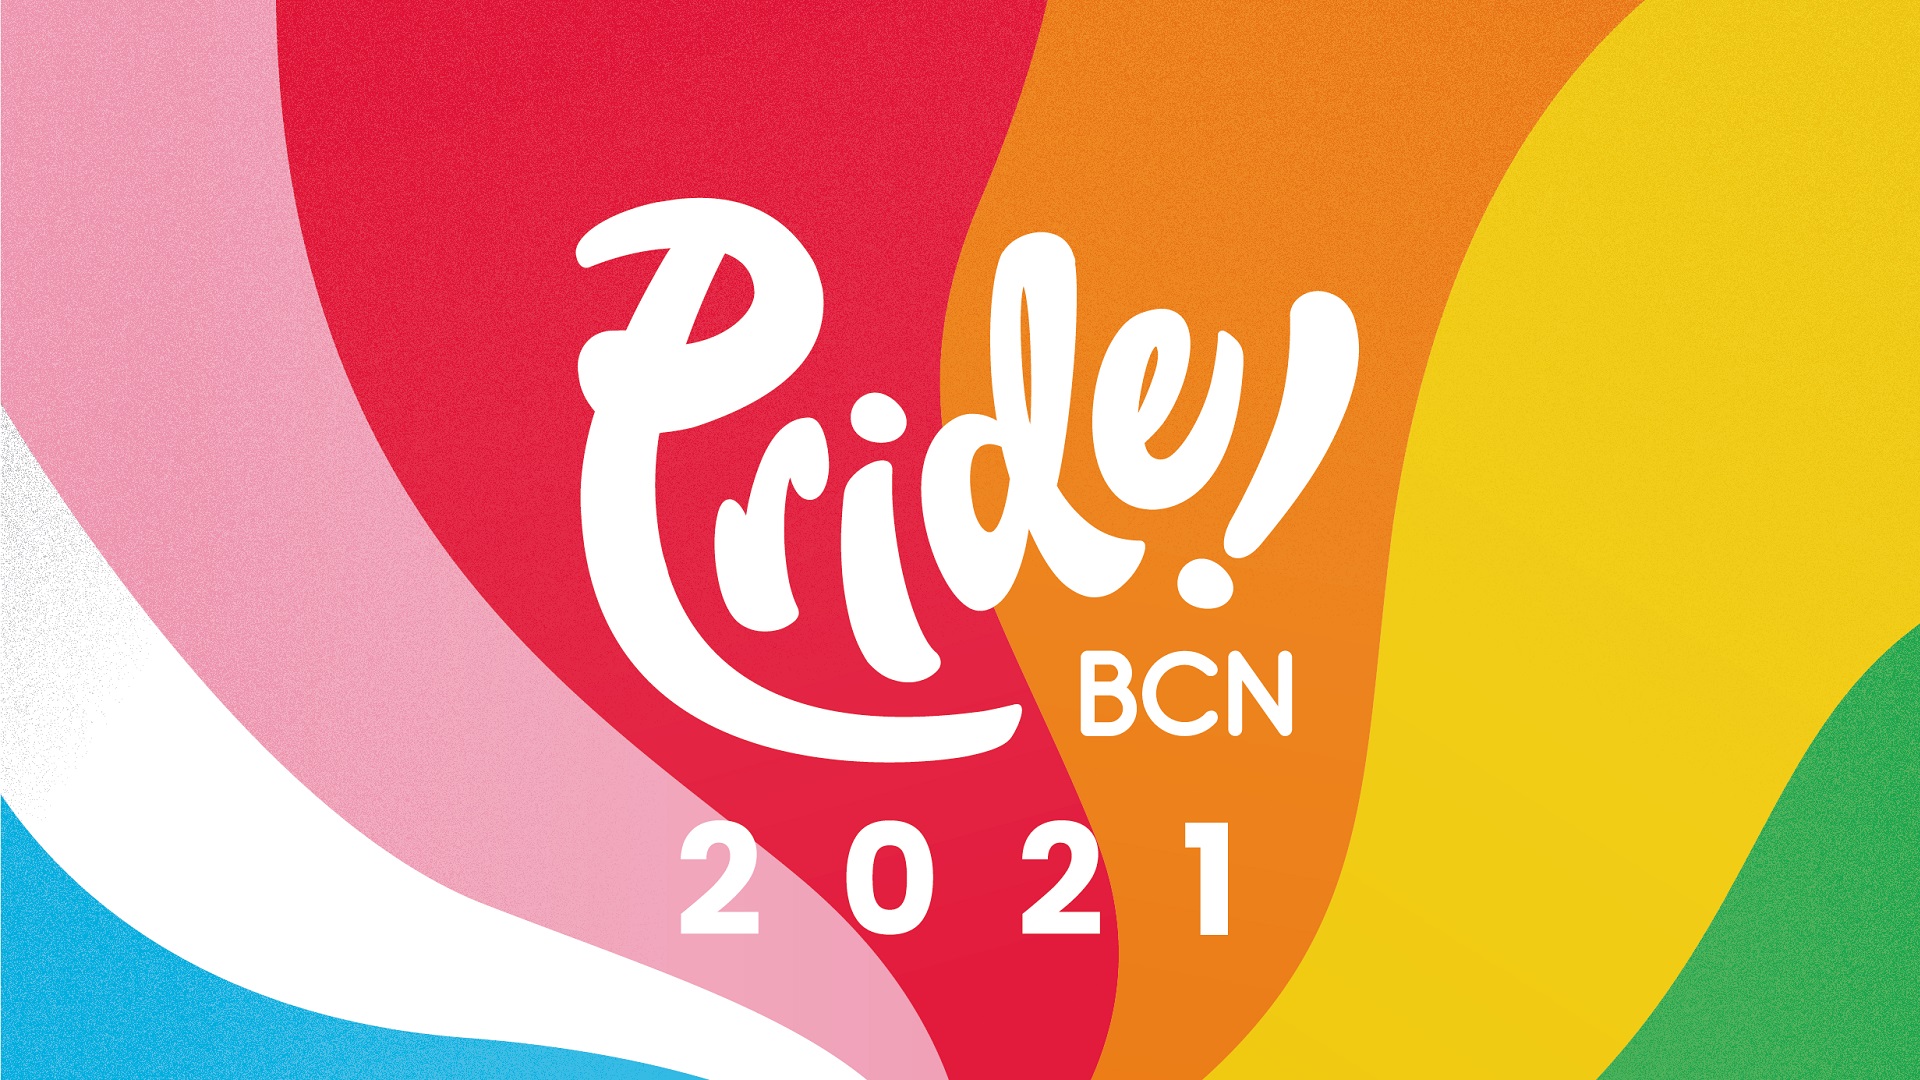 Elena Tsagrinou y Eleni Foureira confirmadas para el Pride Barcelona 2021